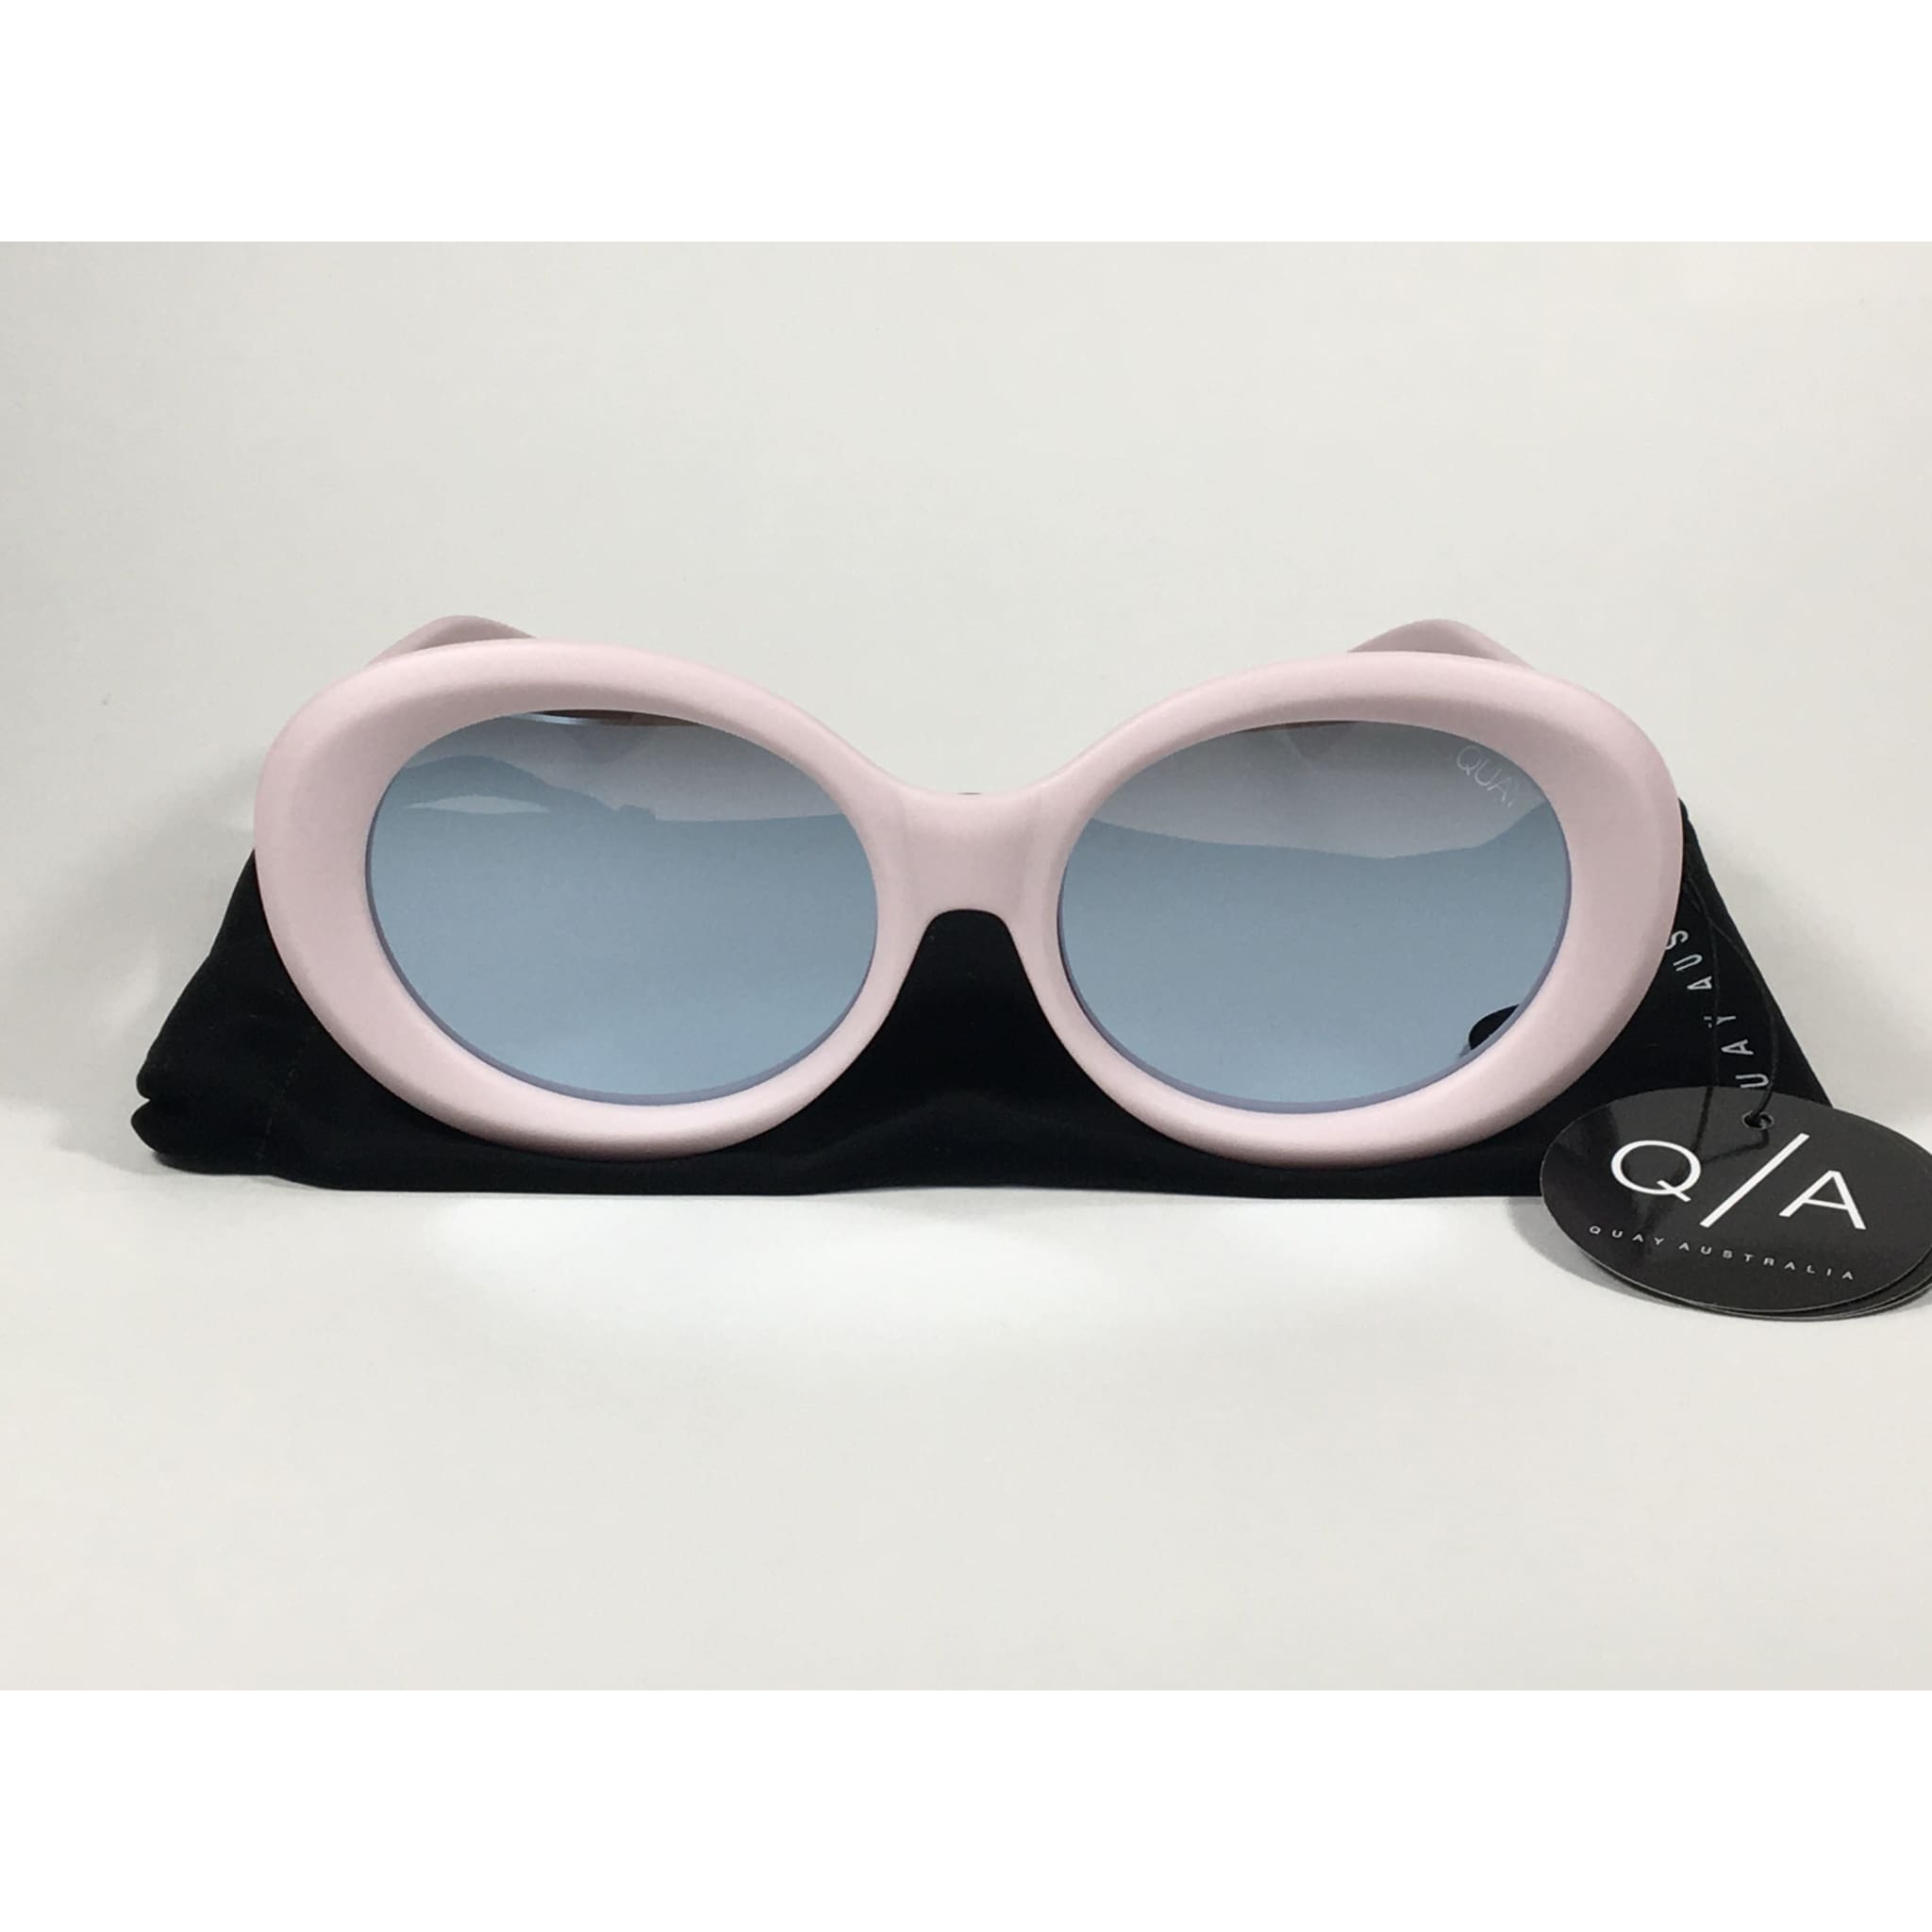 Sunglasses for Oval Face Shapes | Quay Australia – OVERSIZED